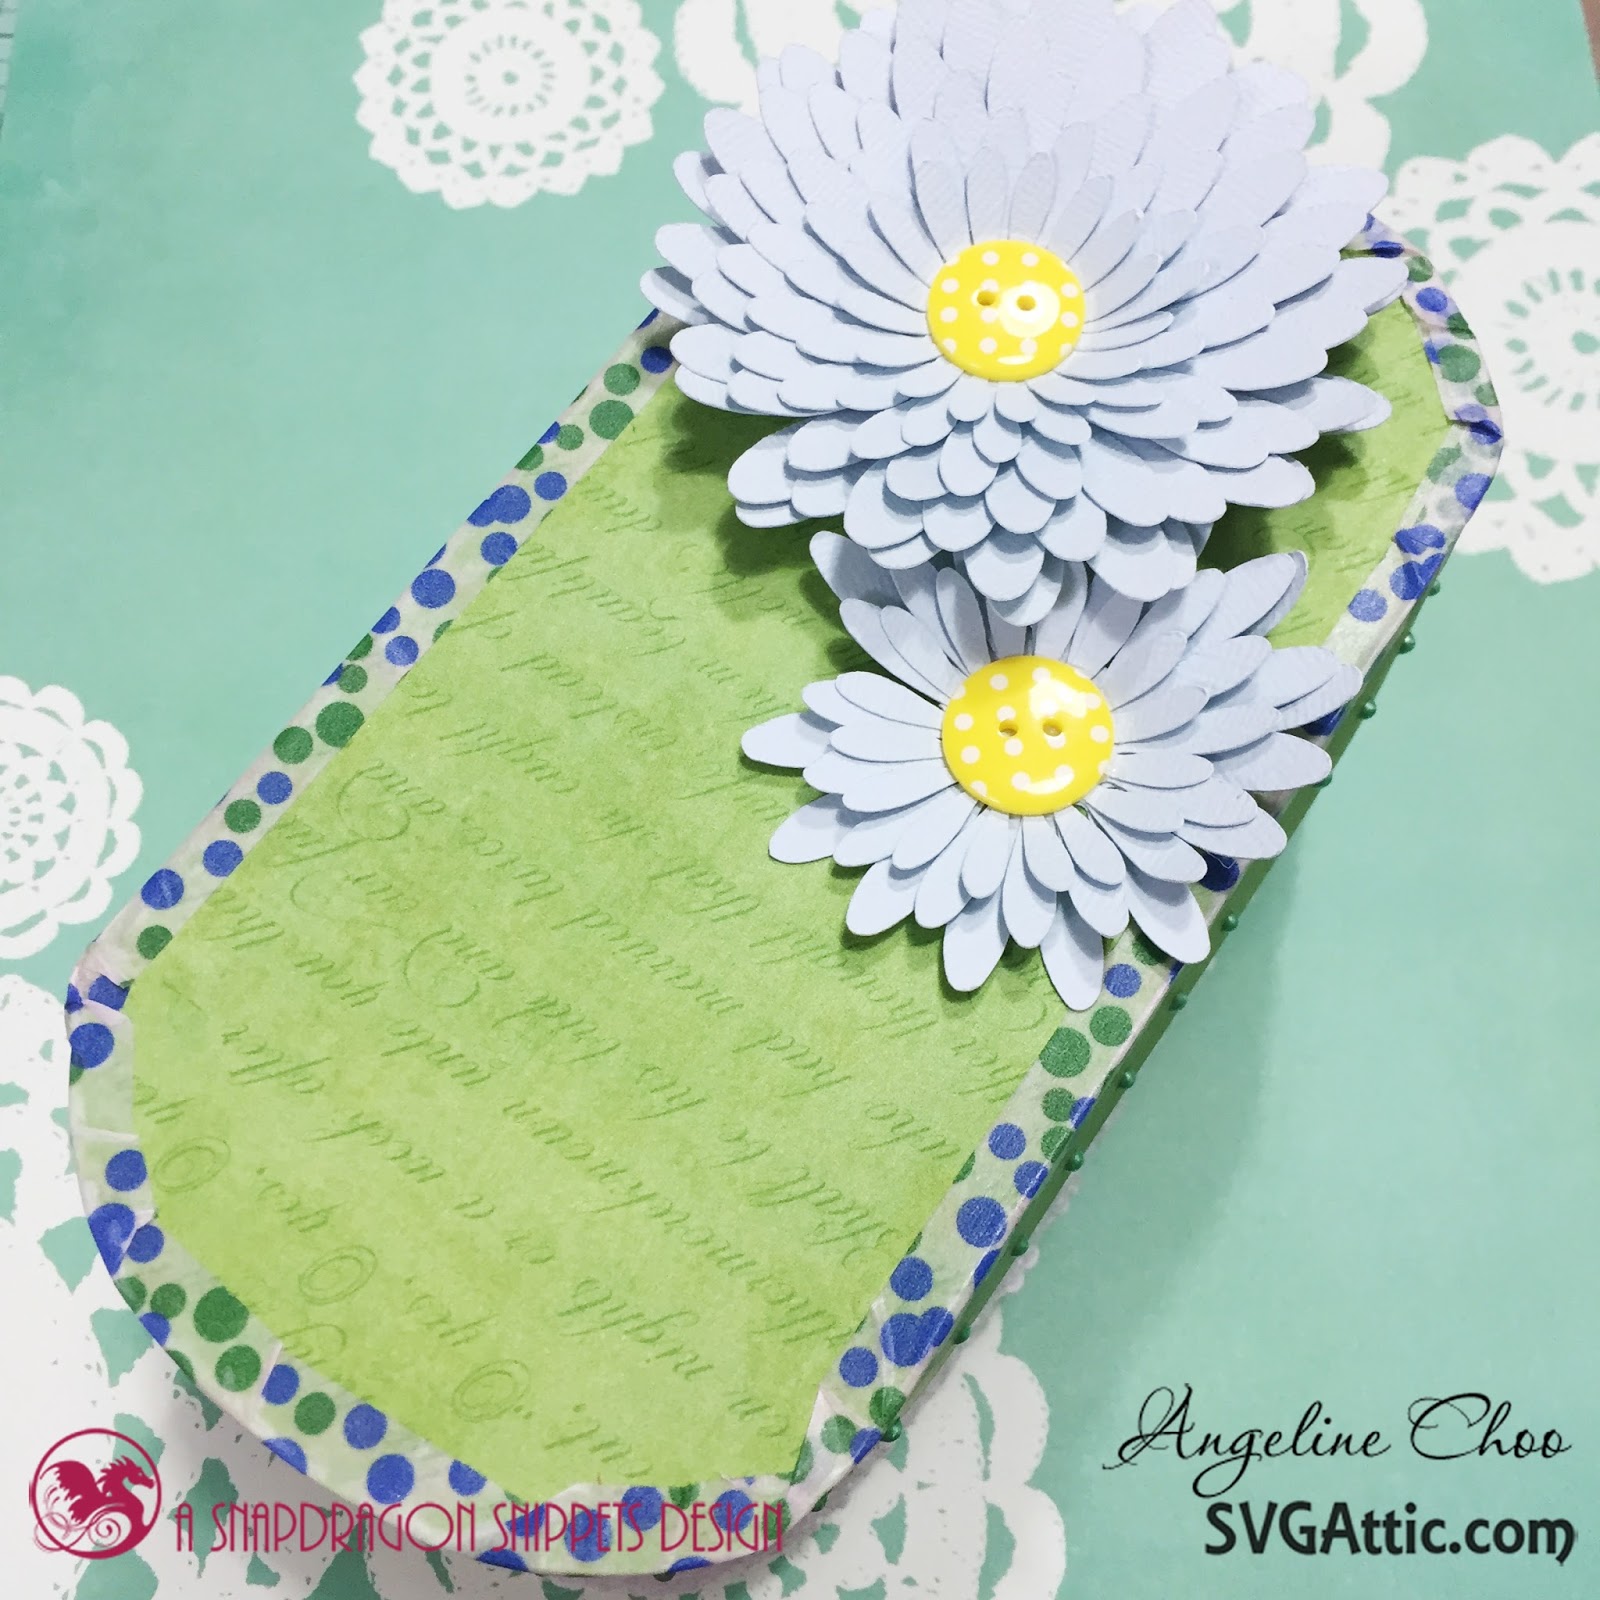 SVG Attic: Flower box with Angeline Choo #svgattic #scrappyscrappy #giftbox #flowers